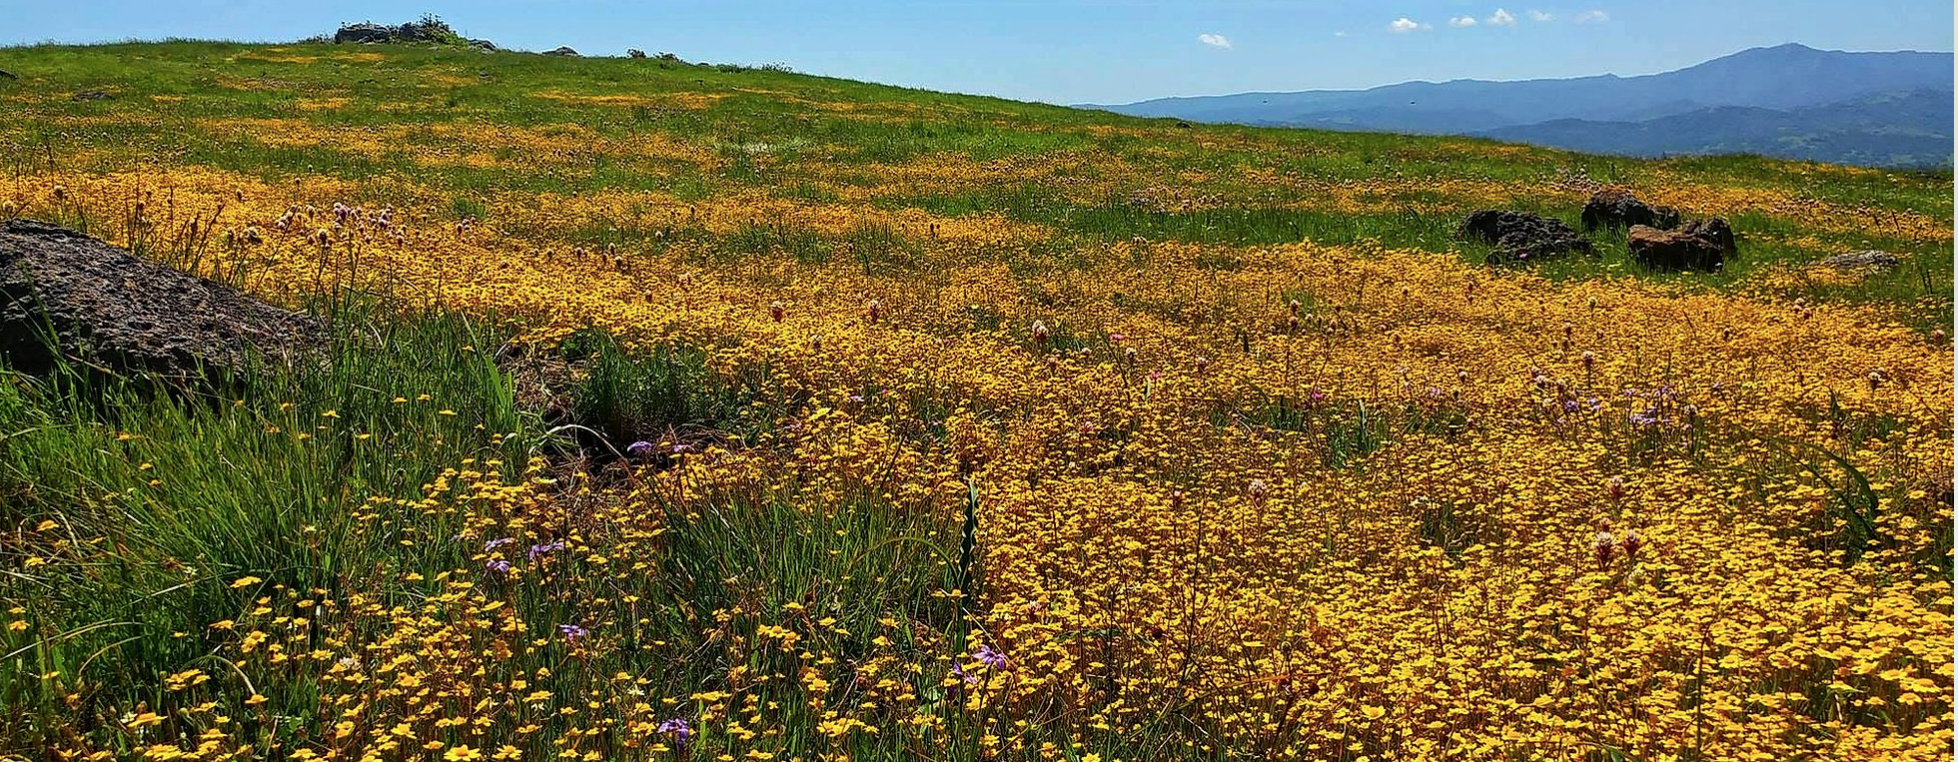 field of golden wildflowers